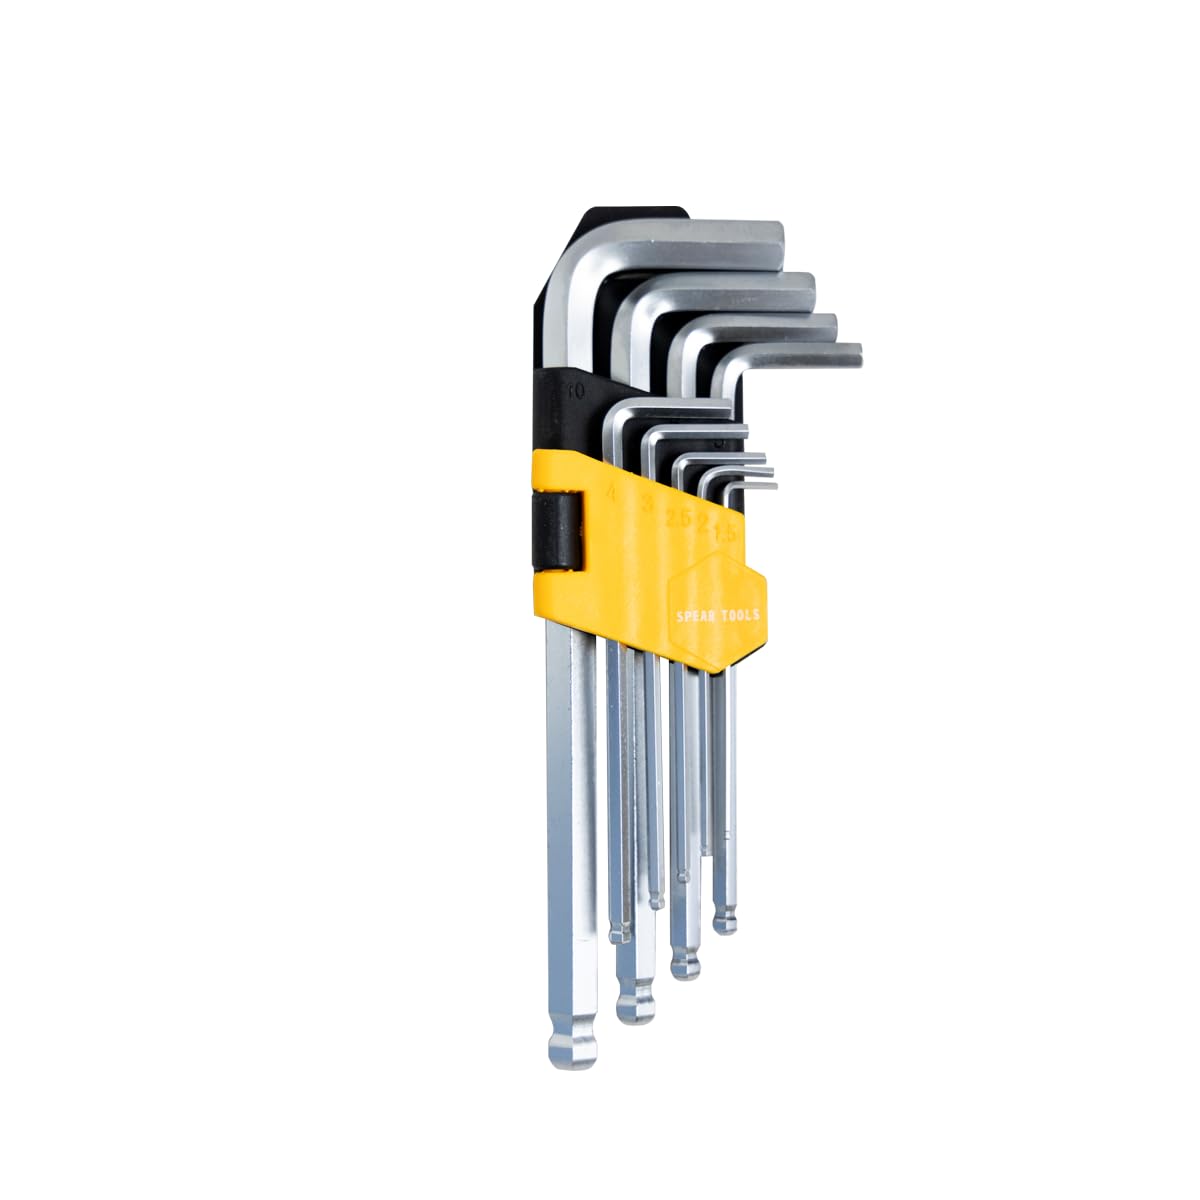 SPEAR 9Pcs Allen Key Trox Set, 1.5mm to 10mm, Chrome Vanadium for DIY, Home, Automobile Applications